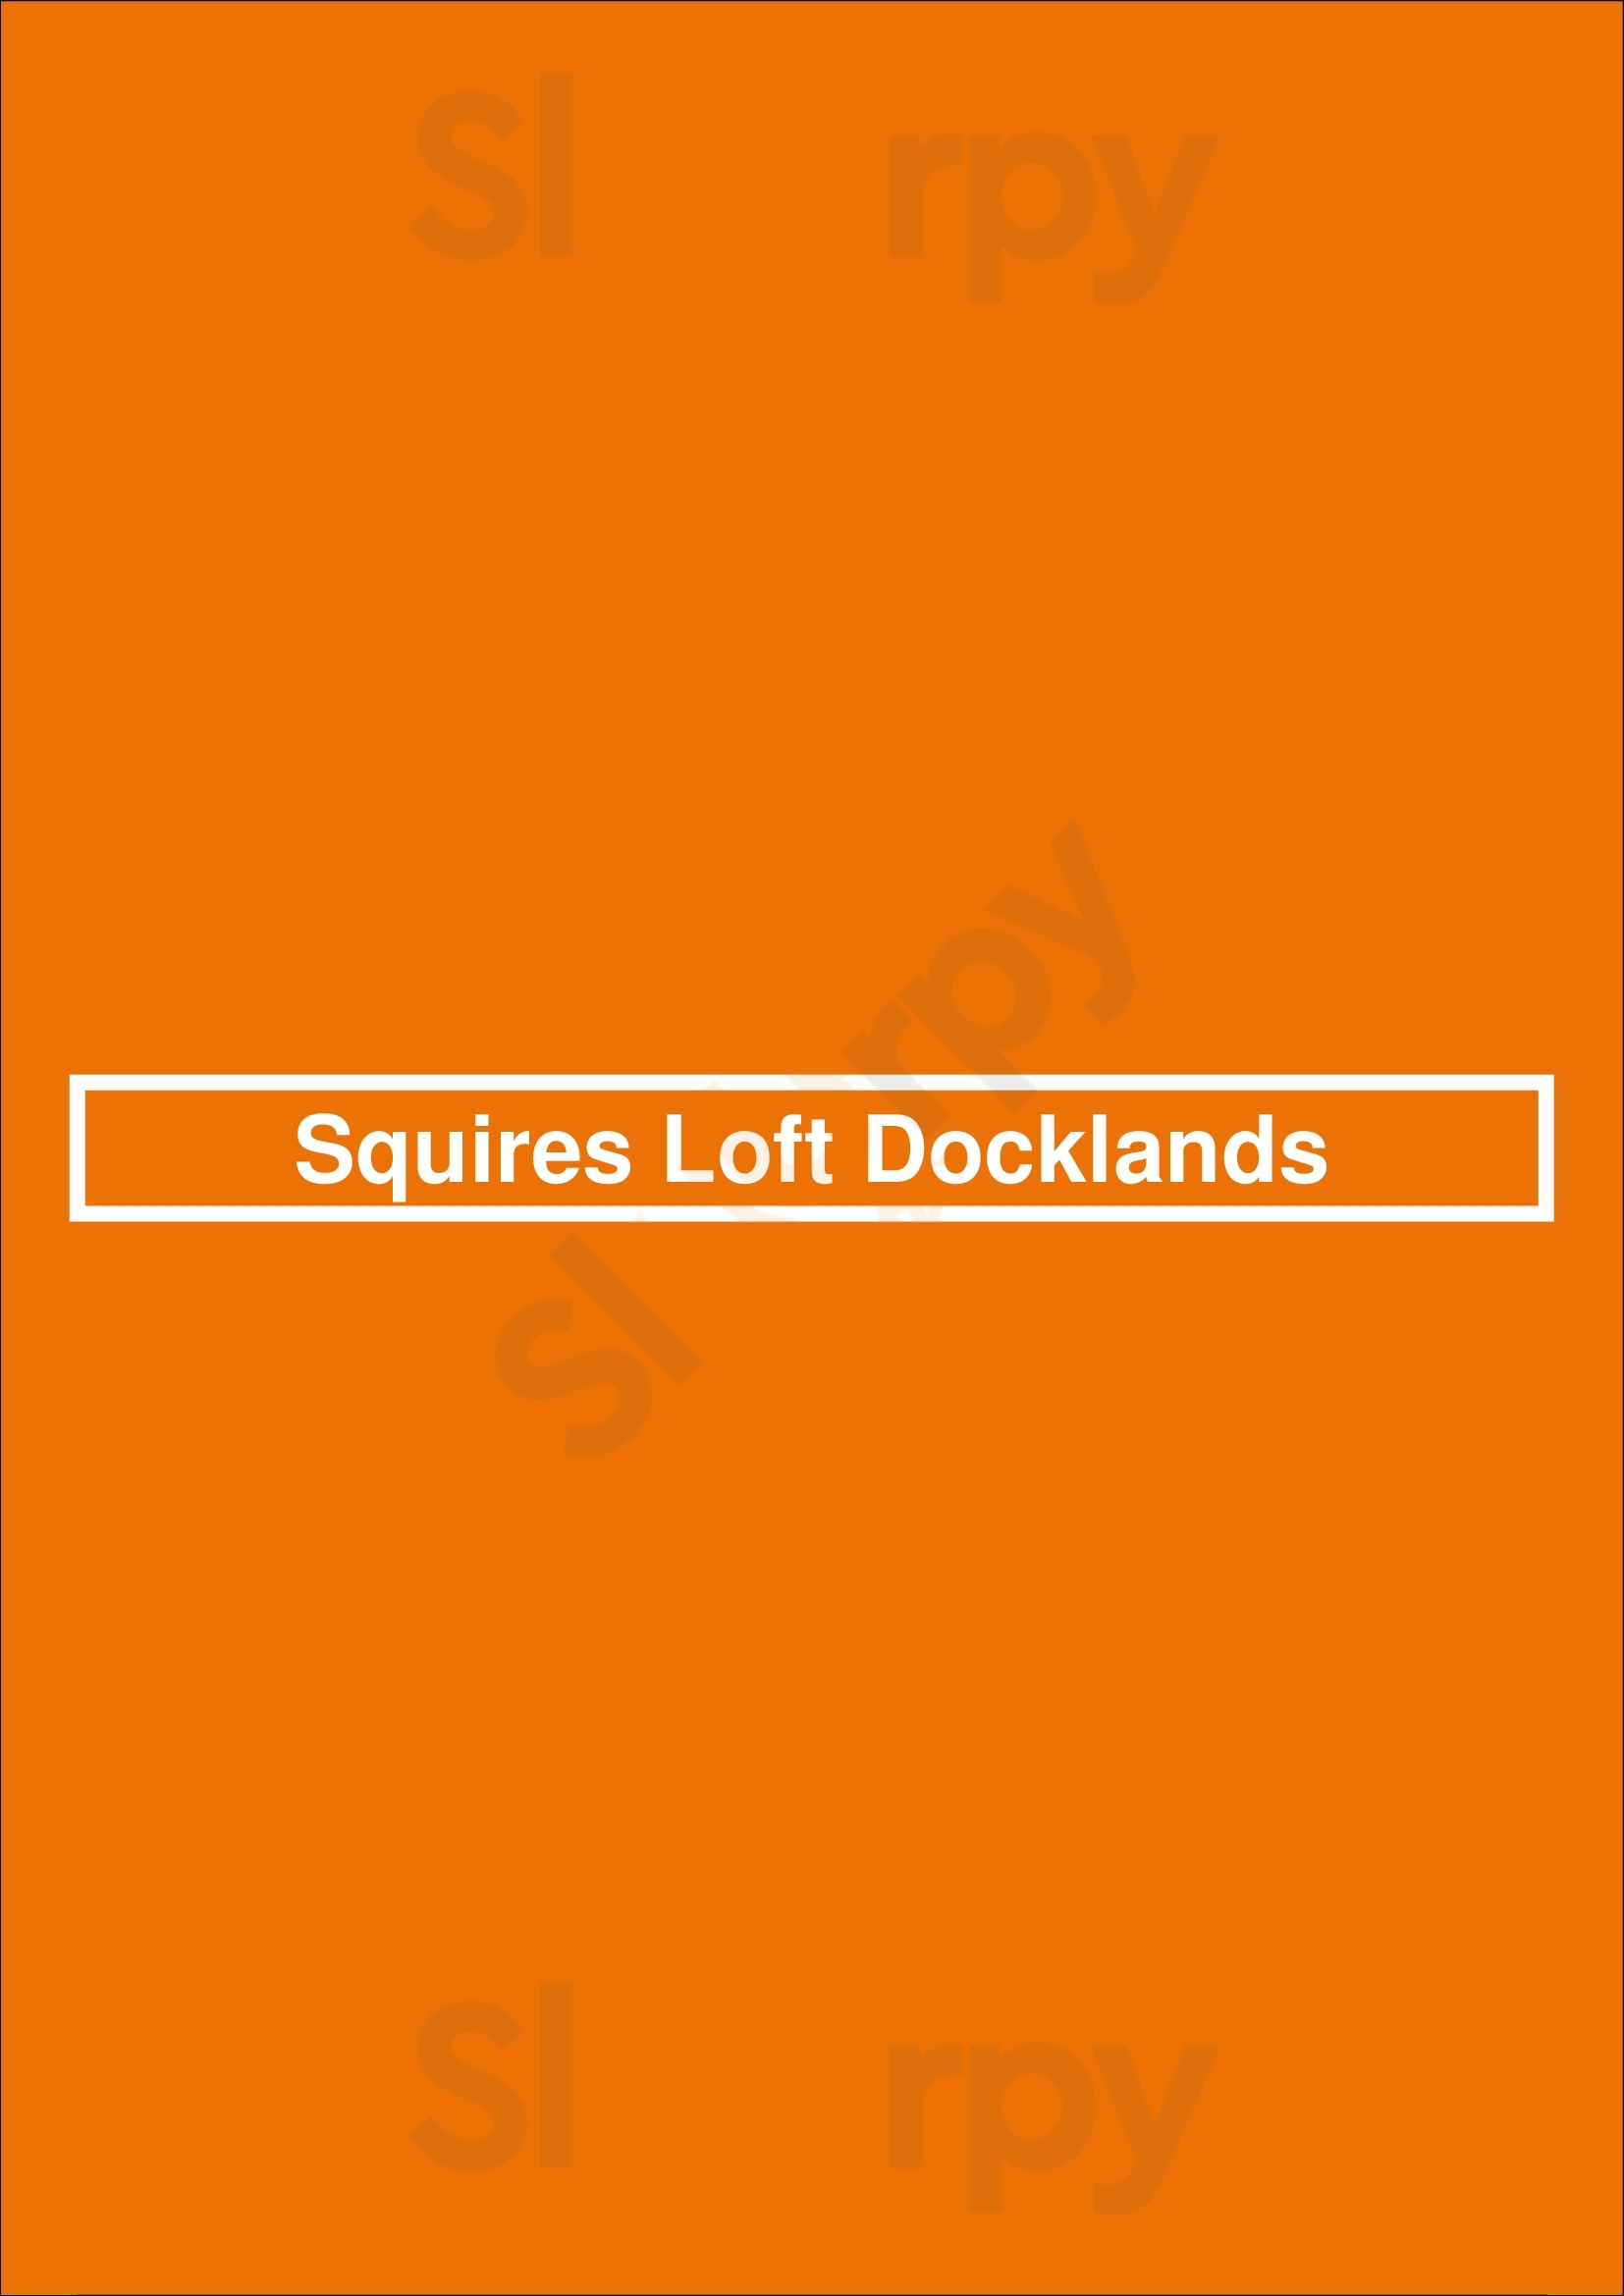 Squires Loft Docklands Melbourne Menu - 1